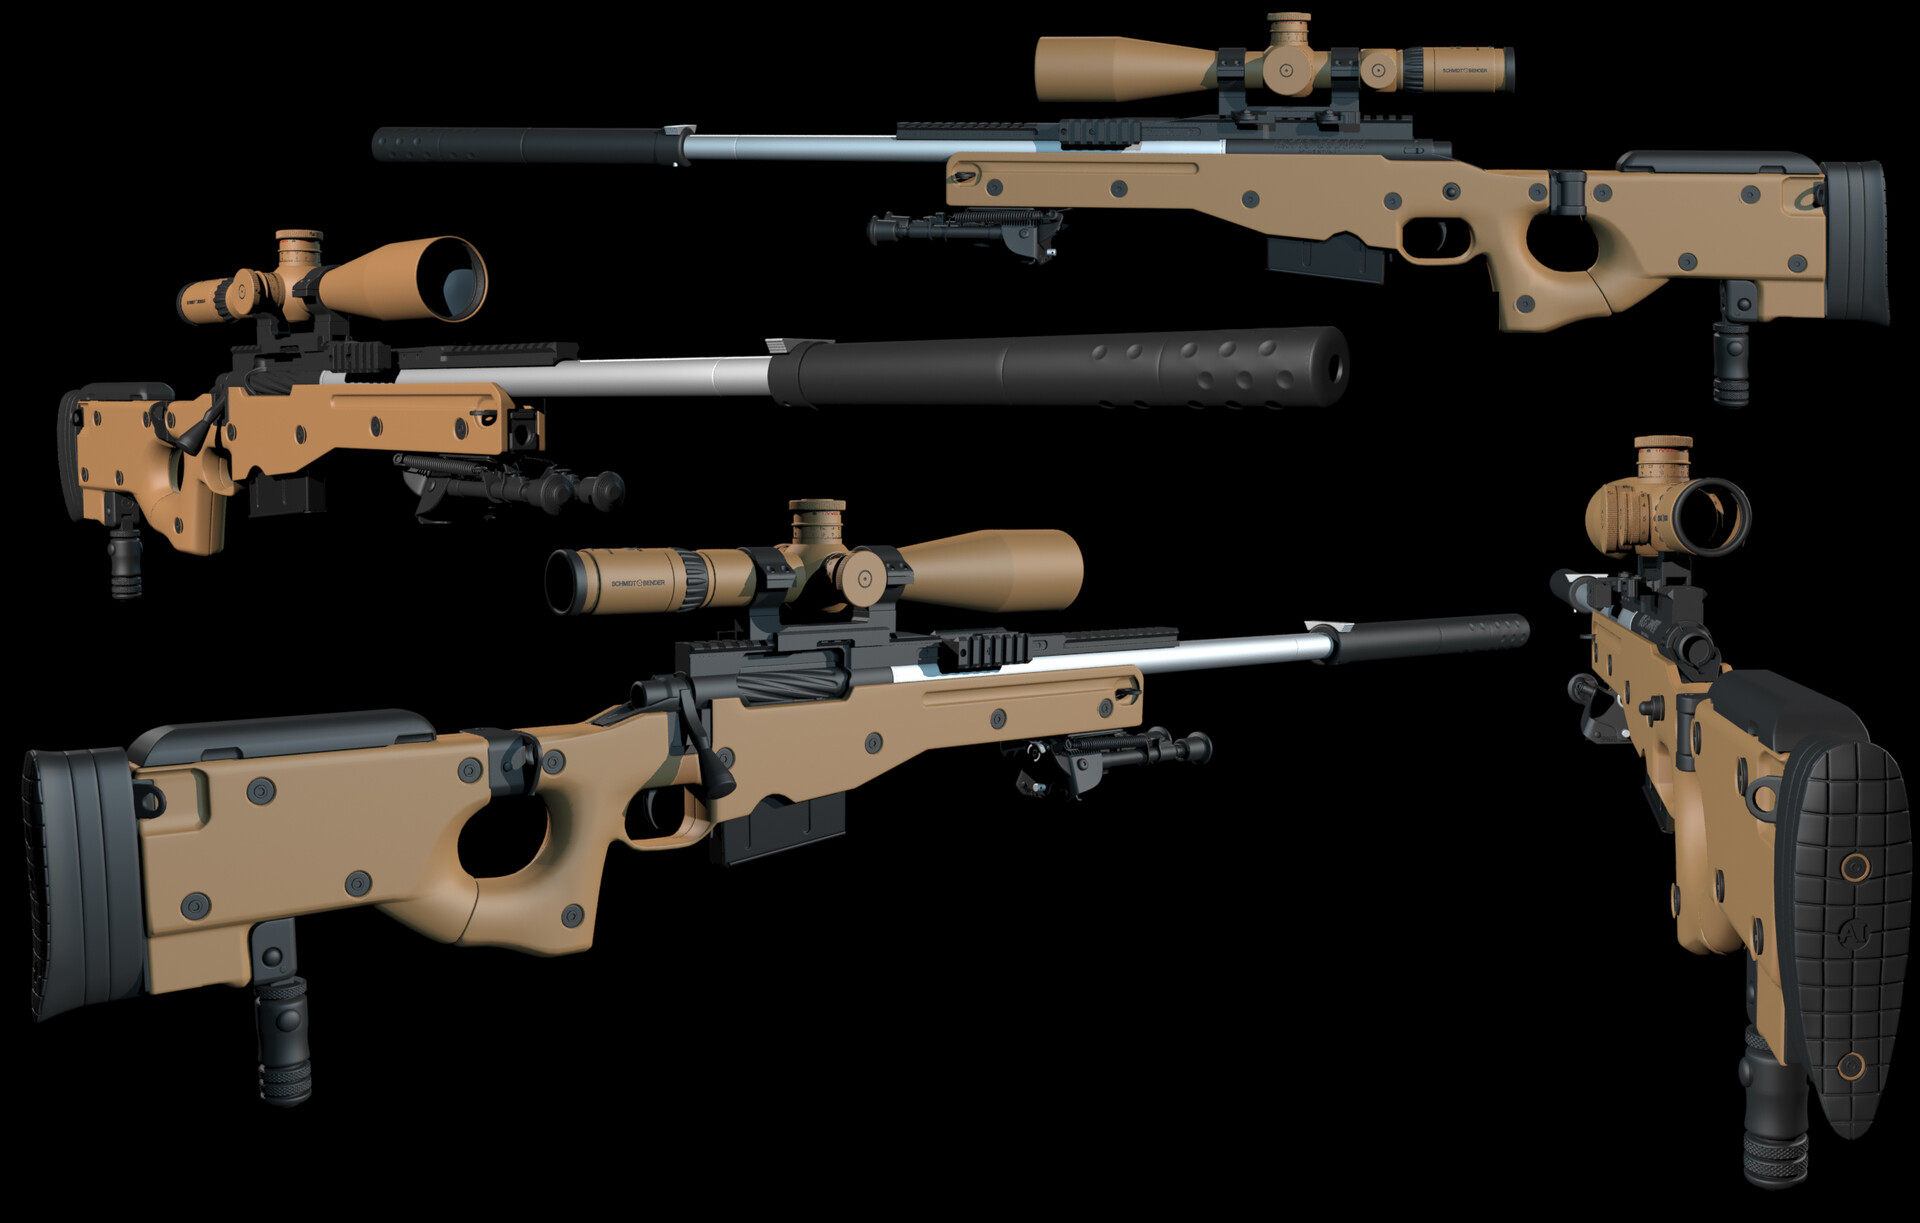 MK13 Mod 6 sniper rifle.